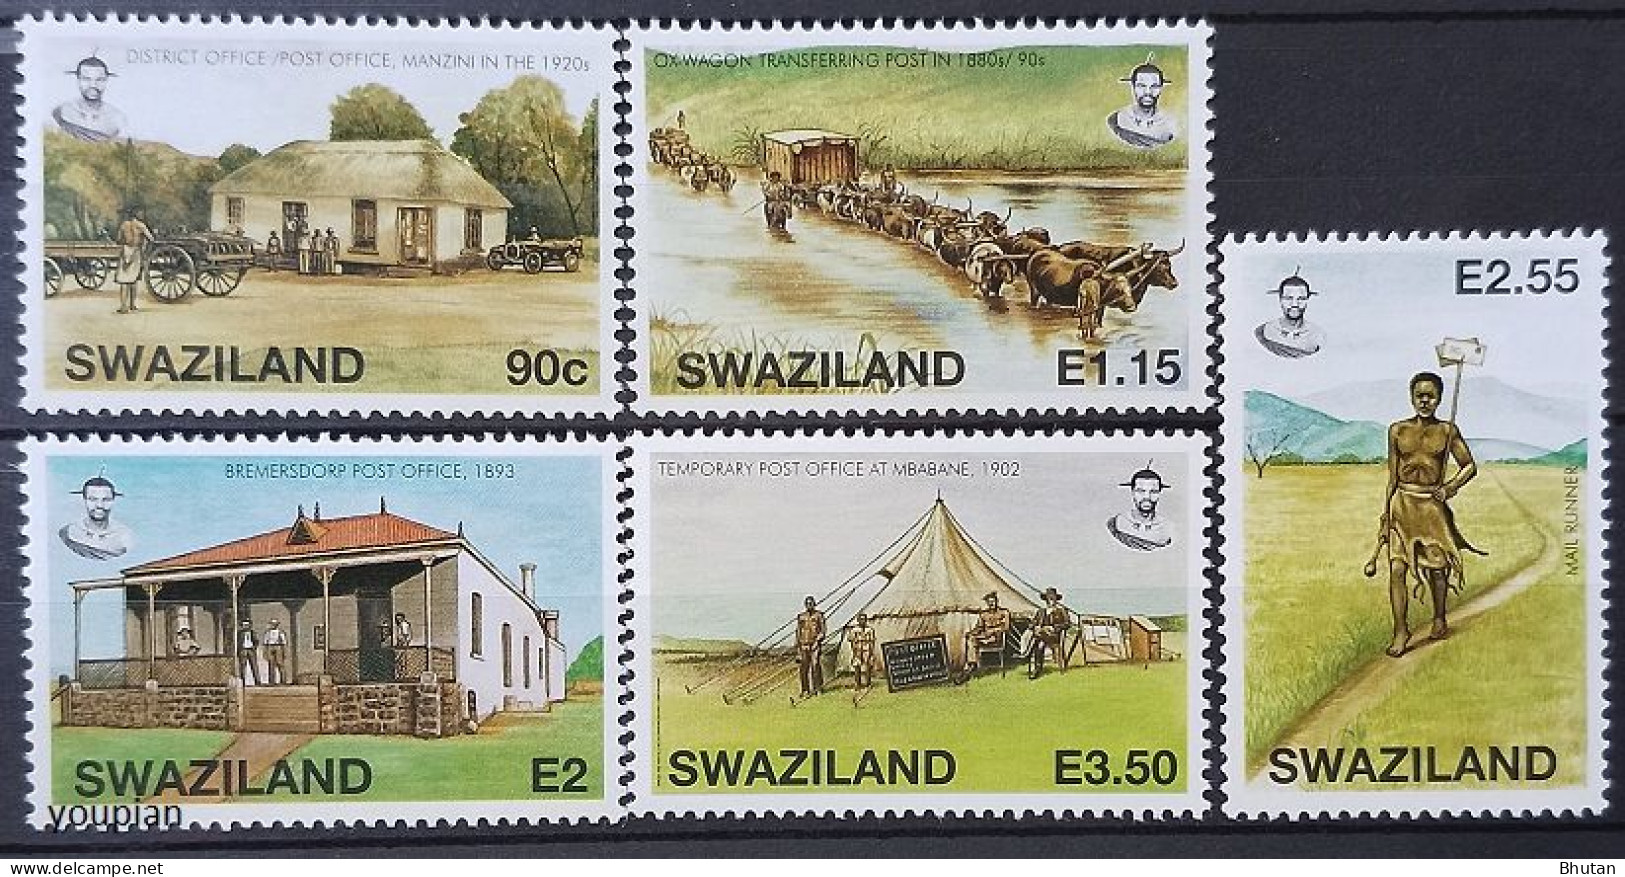 Eswatini (Swaziland) 2006, Postal History, MNH Stamps Set - Swaziland (1968-...)